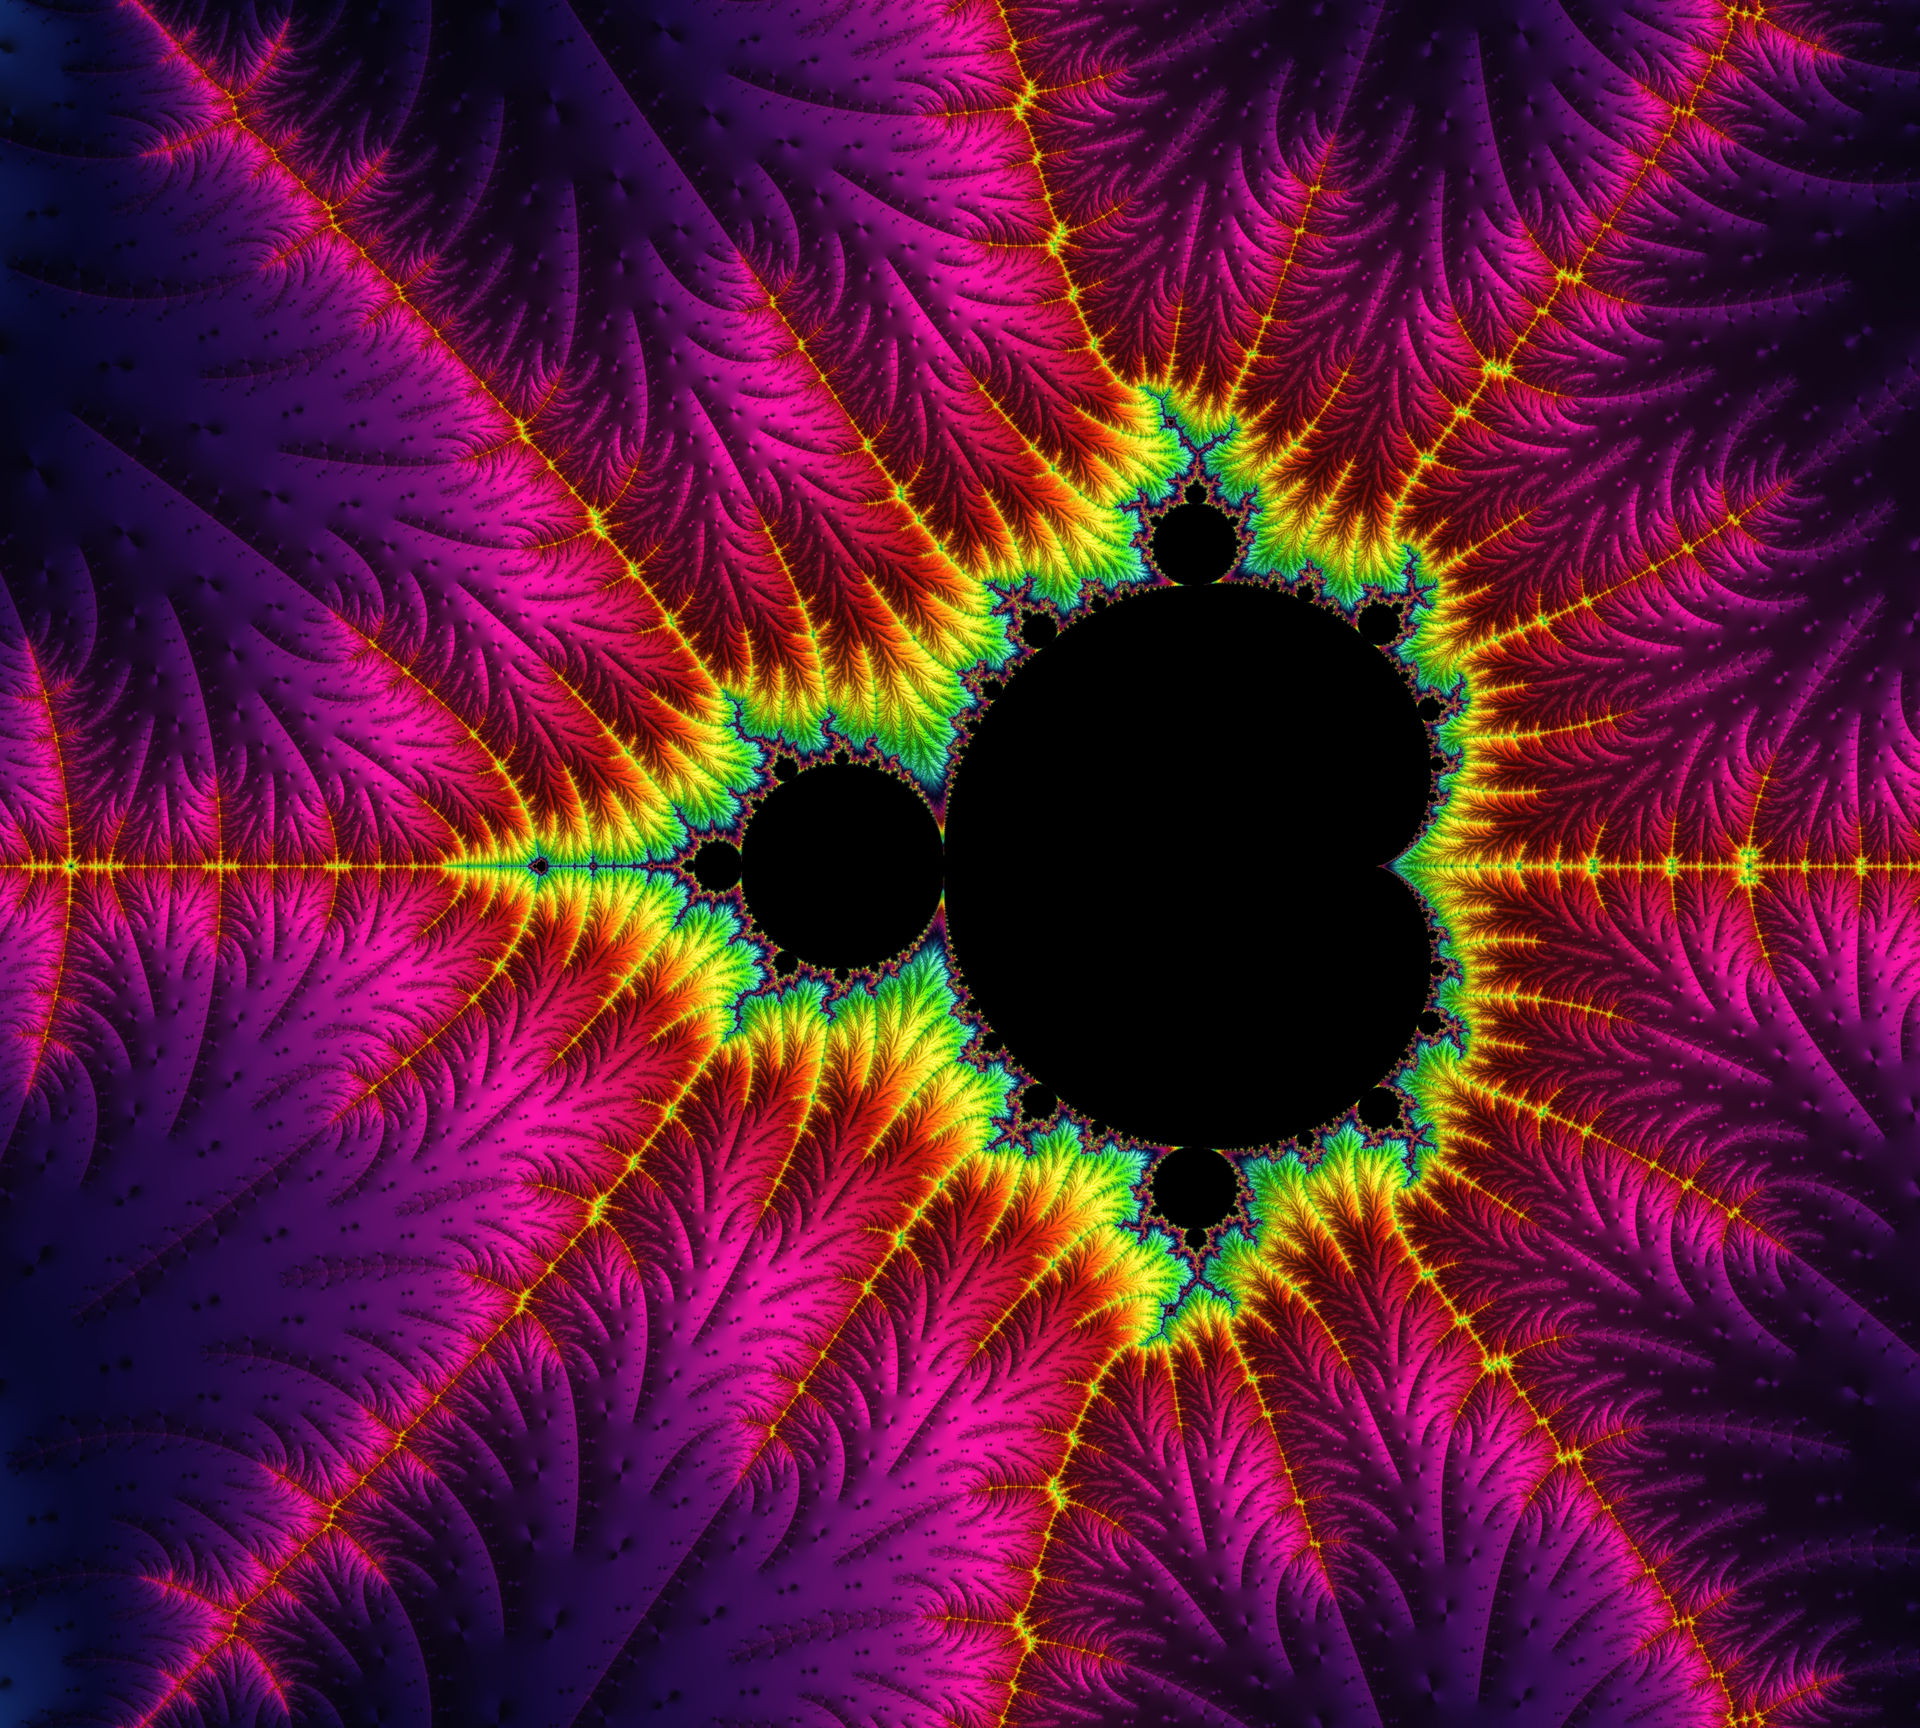 Trippy Mandelbrot Set Zoom by ahhhh6980 on DeviantArt